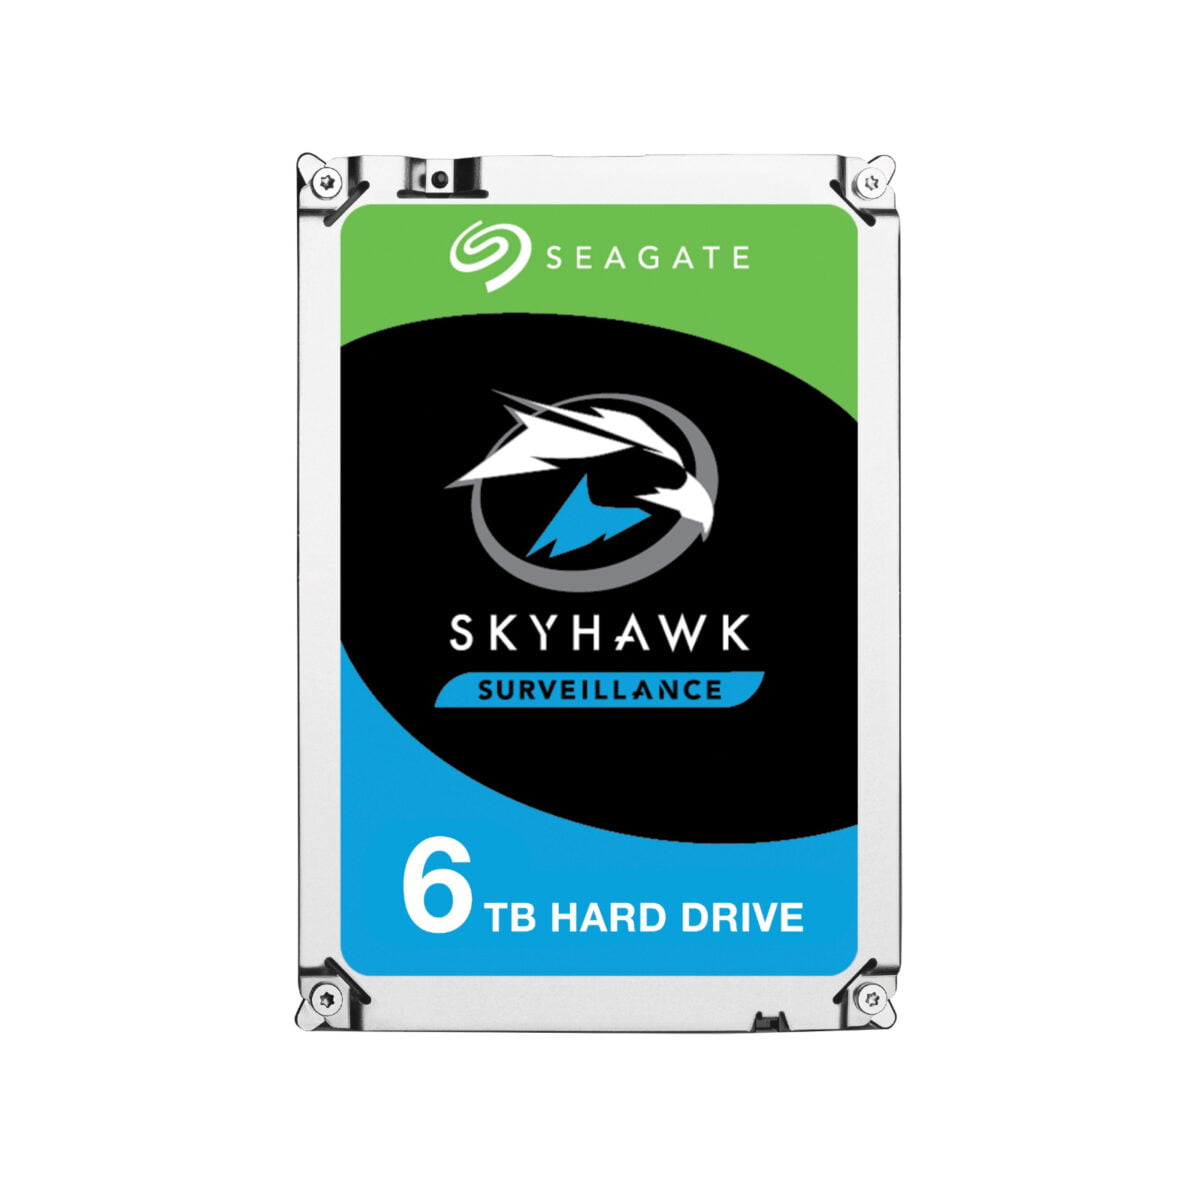 SEAGATE 6TB 3.5 SKYHAWK SURVEILLANCE HDD 256MB